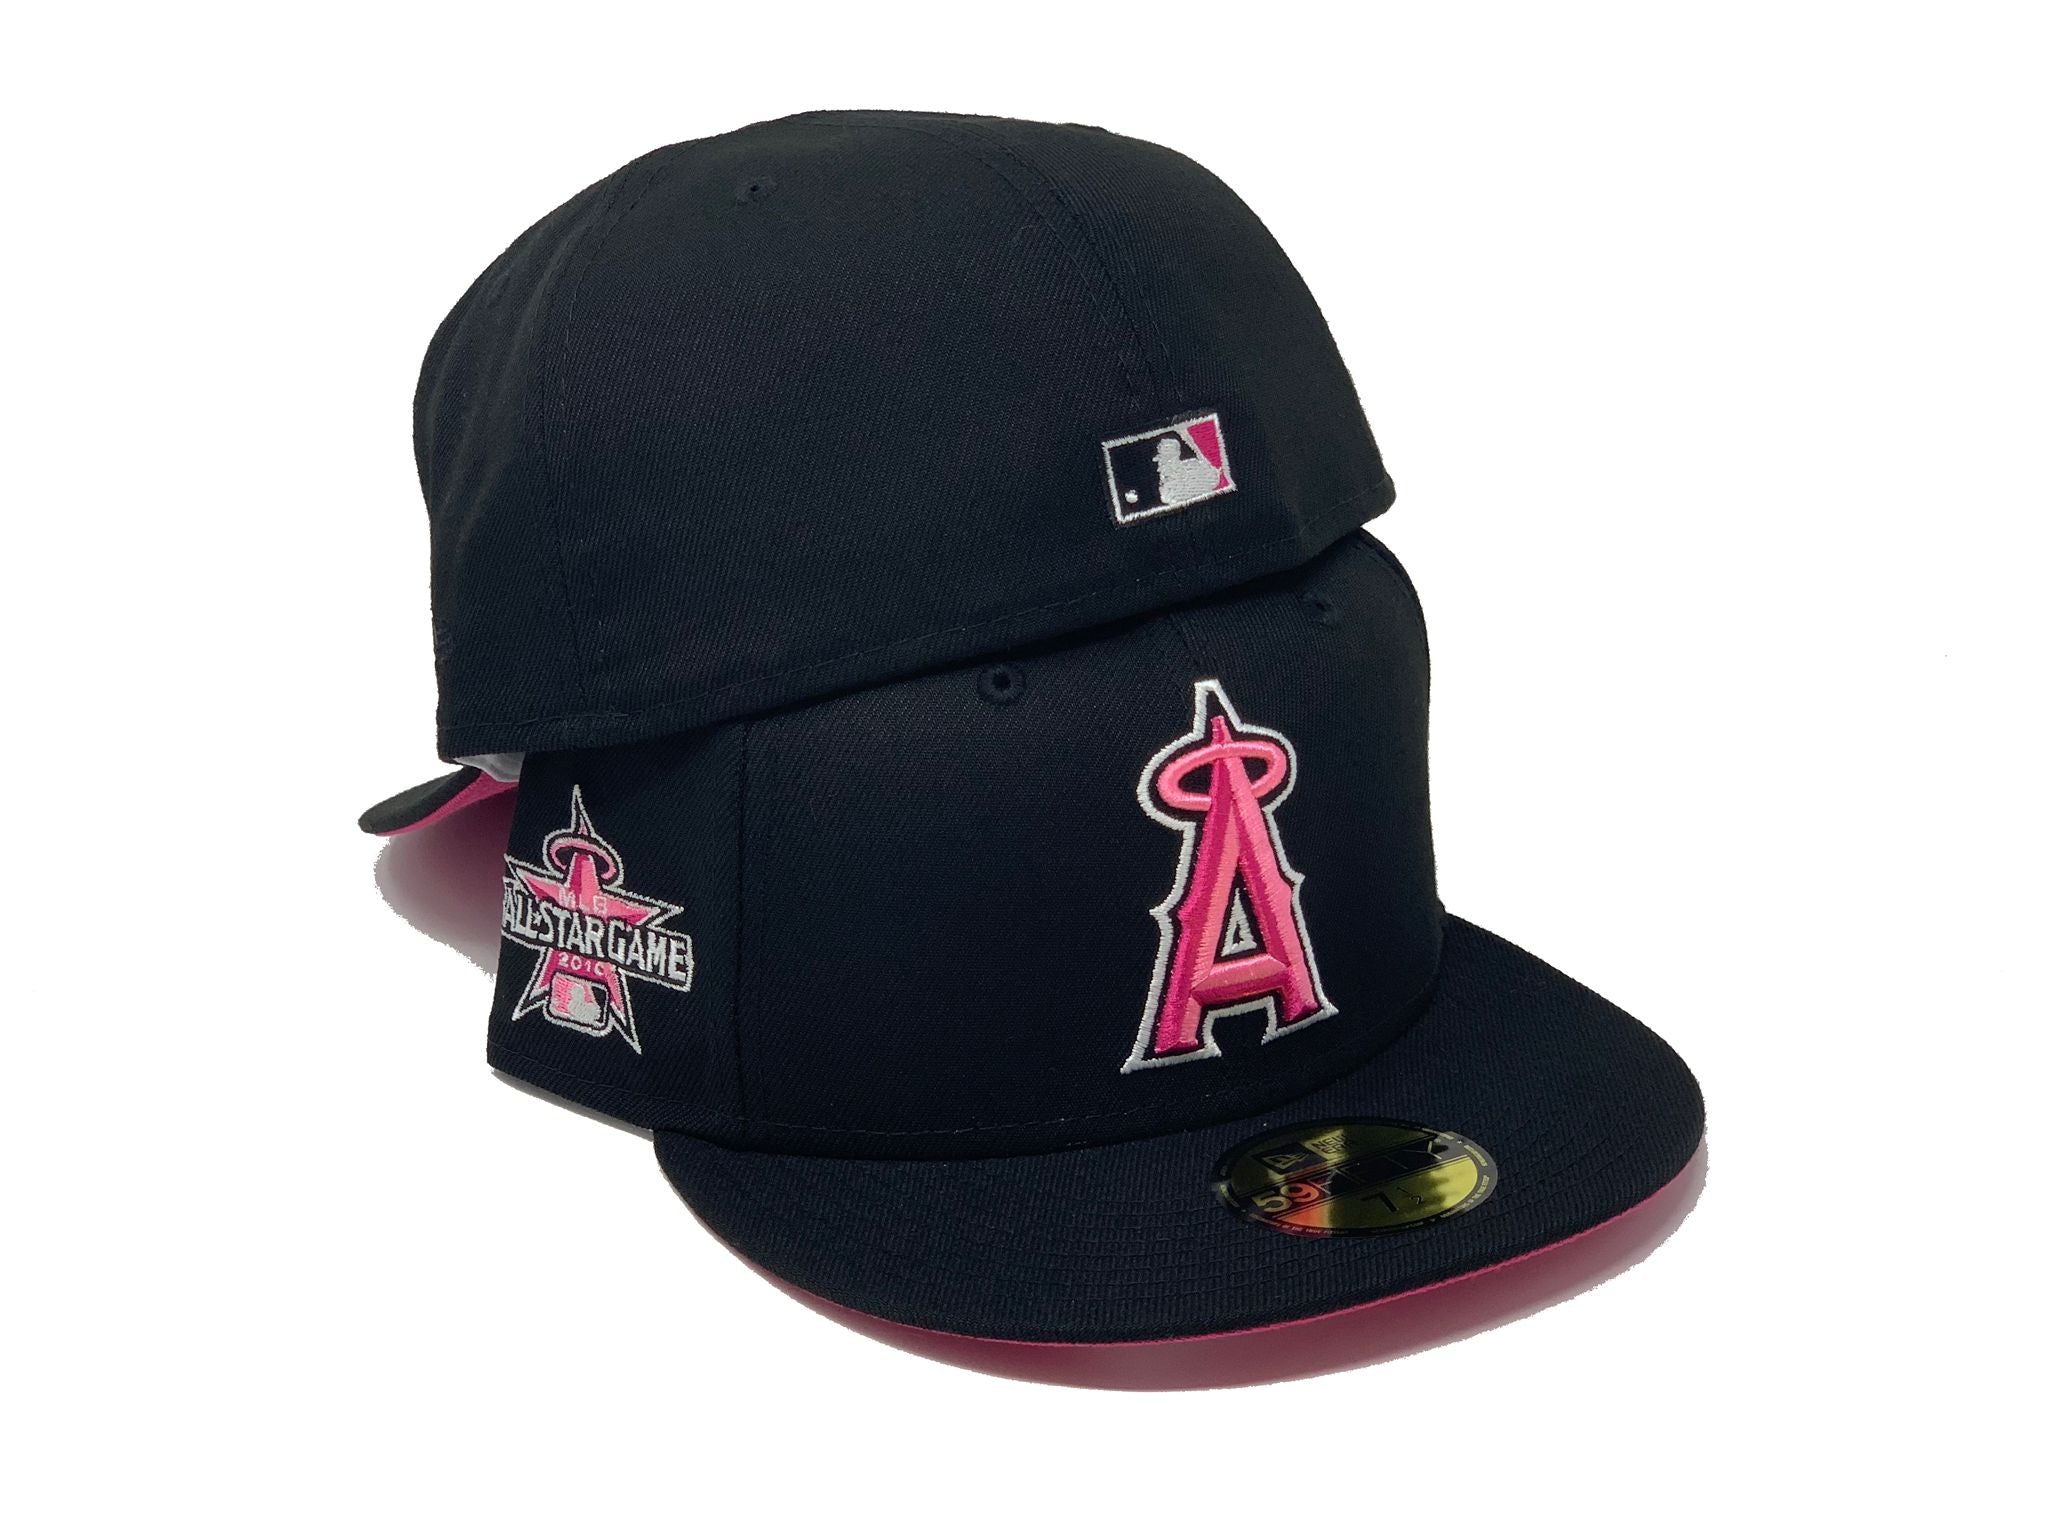 LA CAP (pink on black)